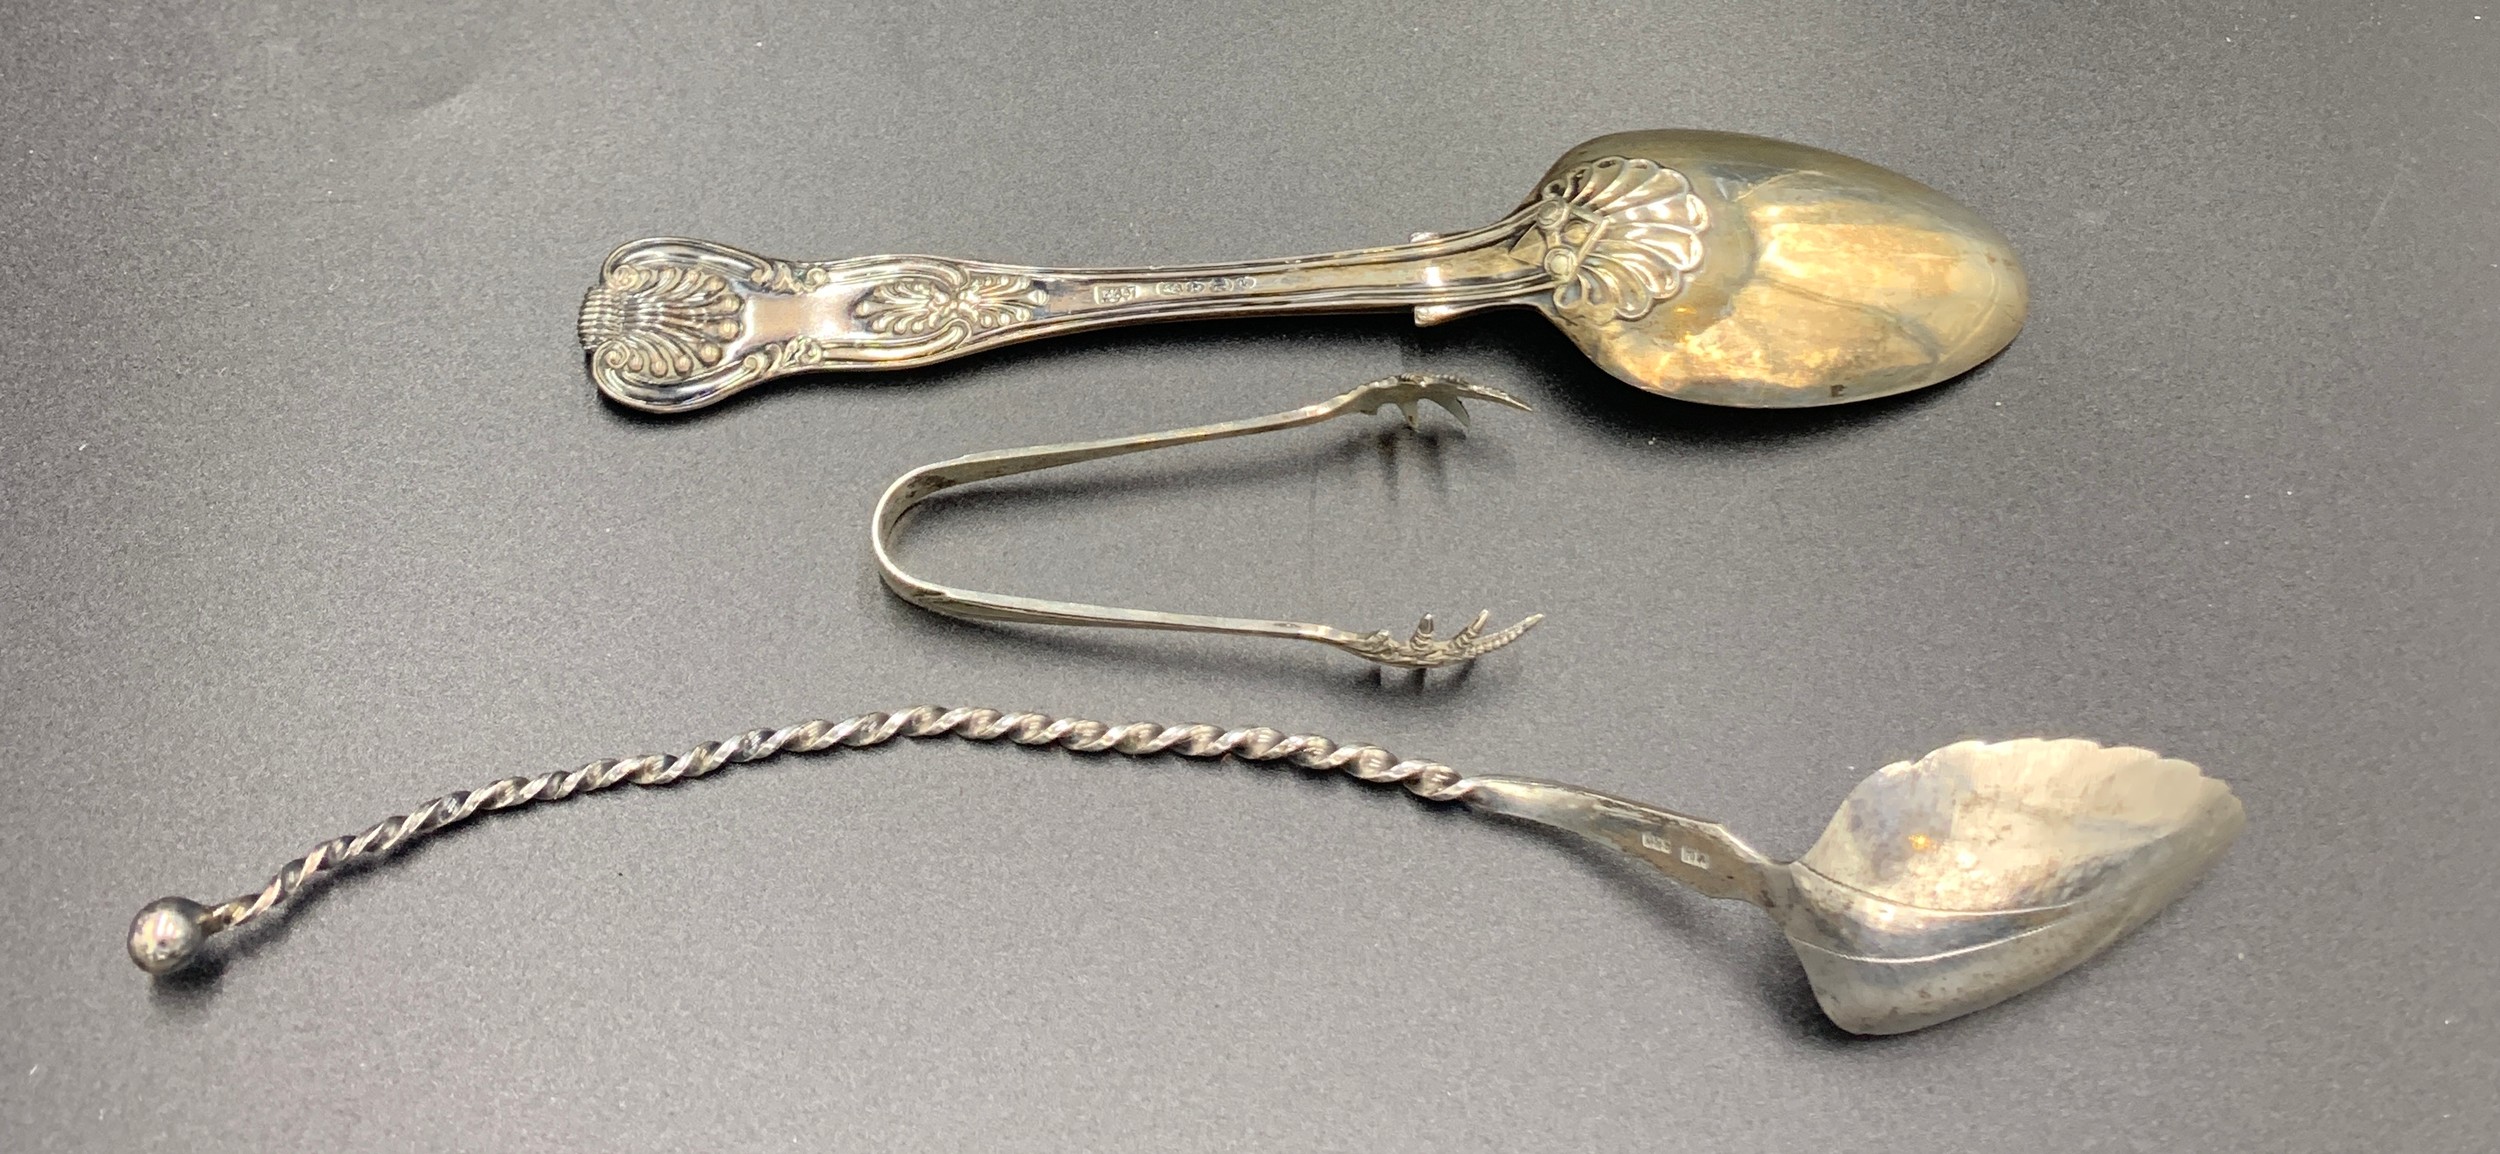 A hallmarked silver spoon London 1854 maker Henry Holland, sugar nips Birmingham 1909 maker I.S. - Image 2 of 2